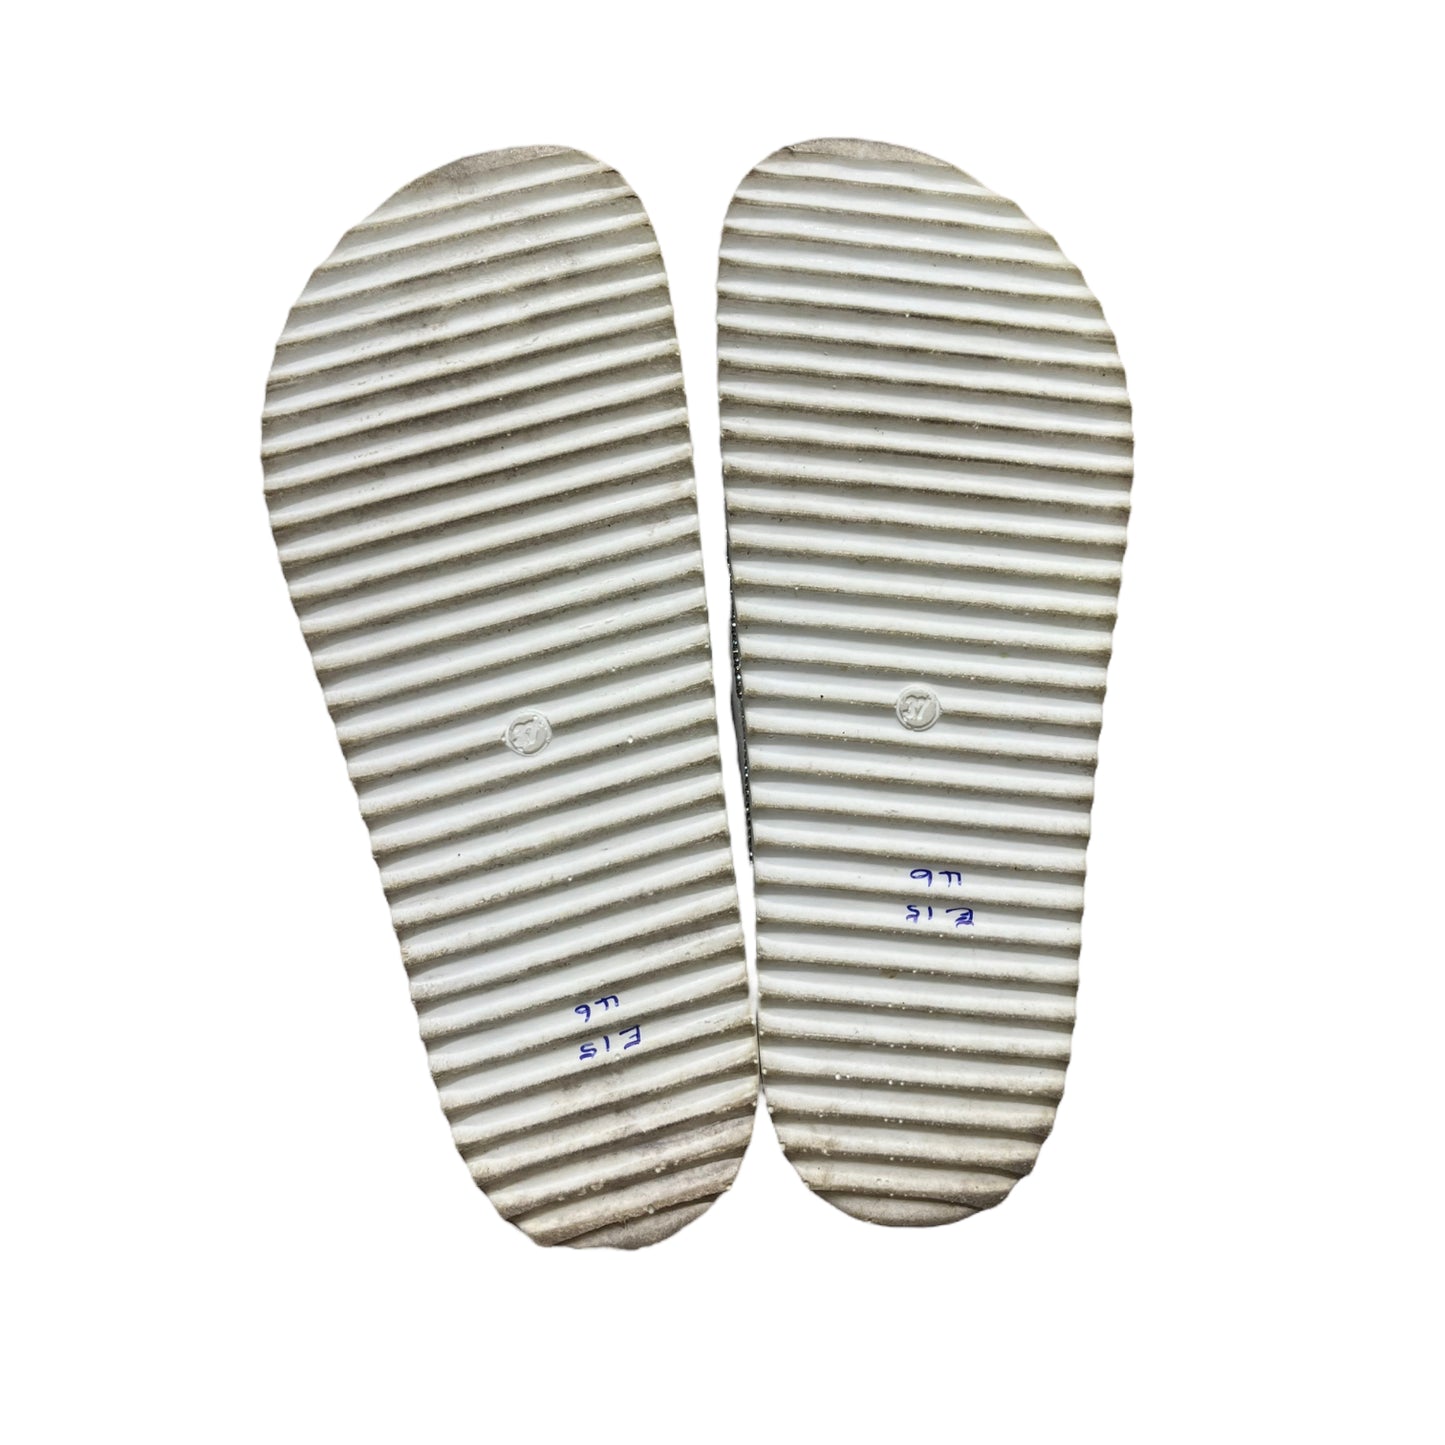 Carvela White Sparkly Chunky Sandals